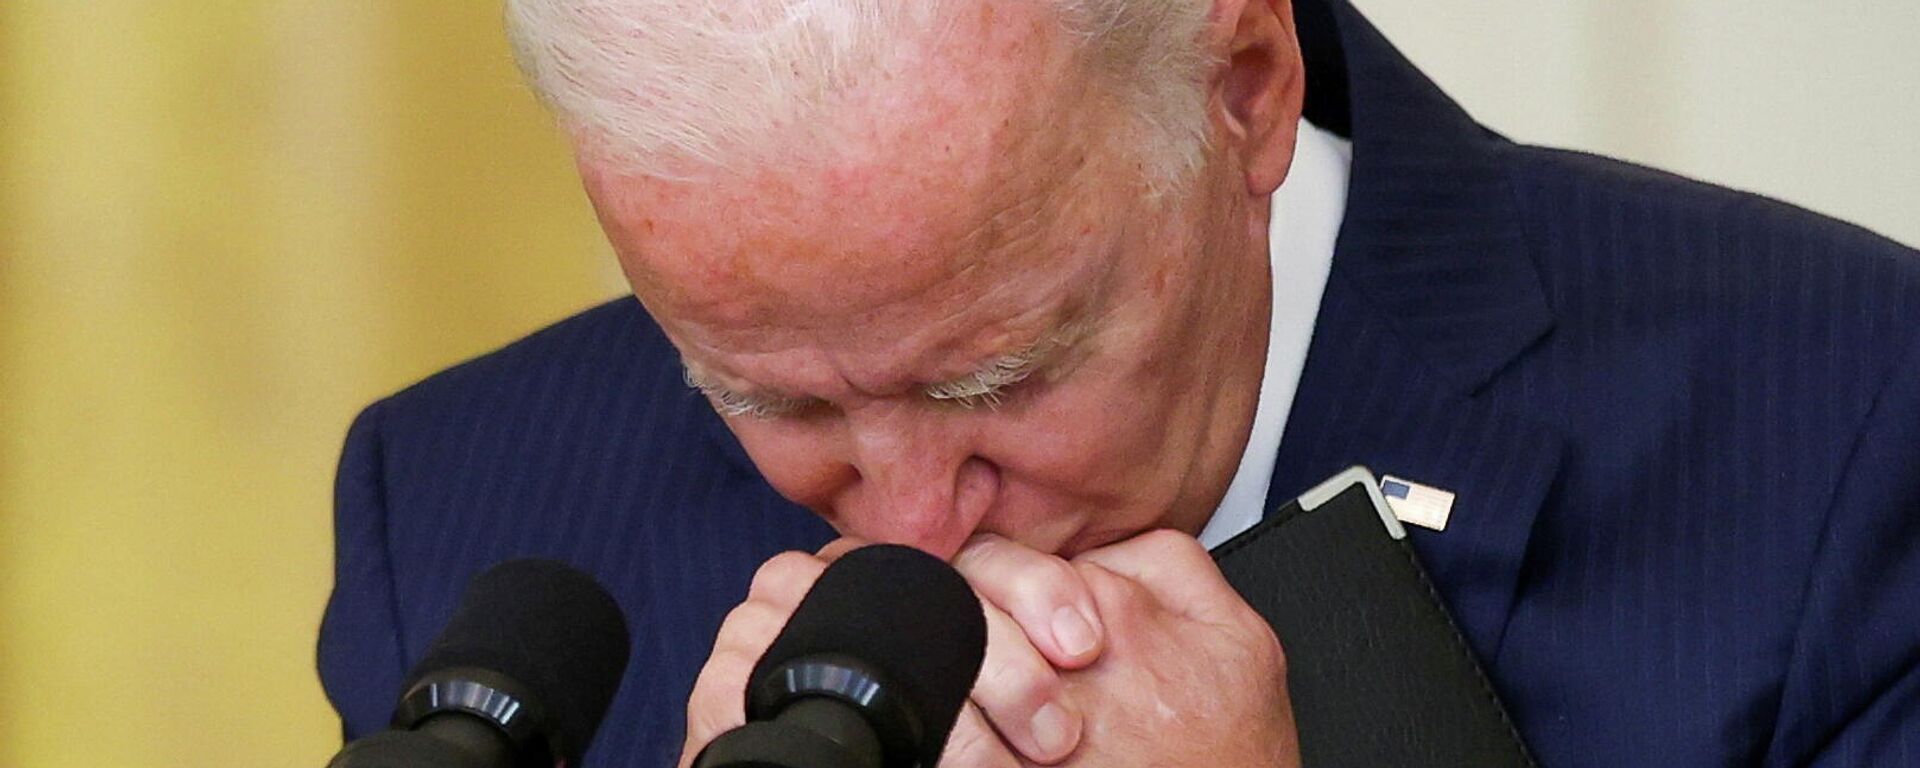 Joe Biden, presidente de EEUU - Sputnik Mundo, 1920, 27.08.2021